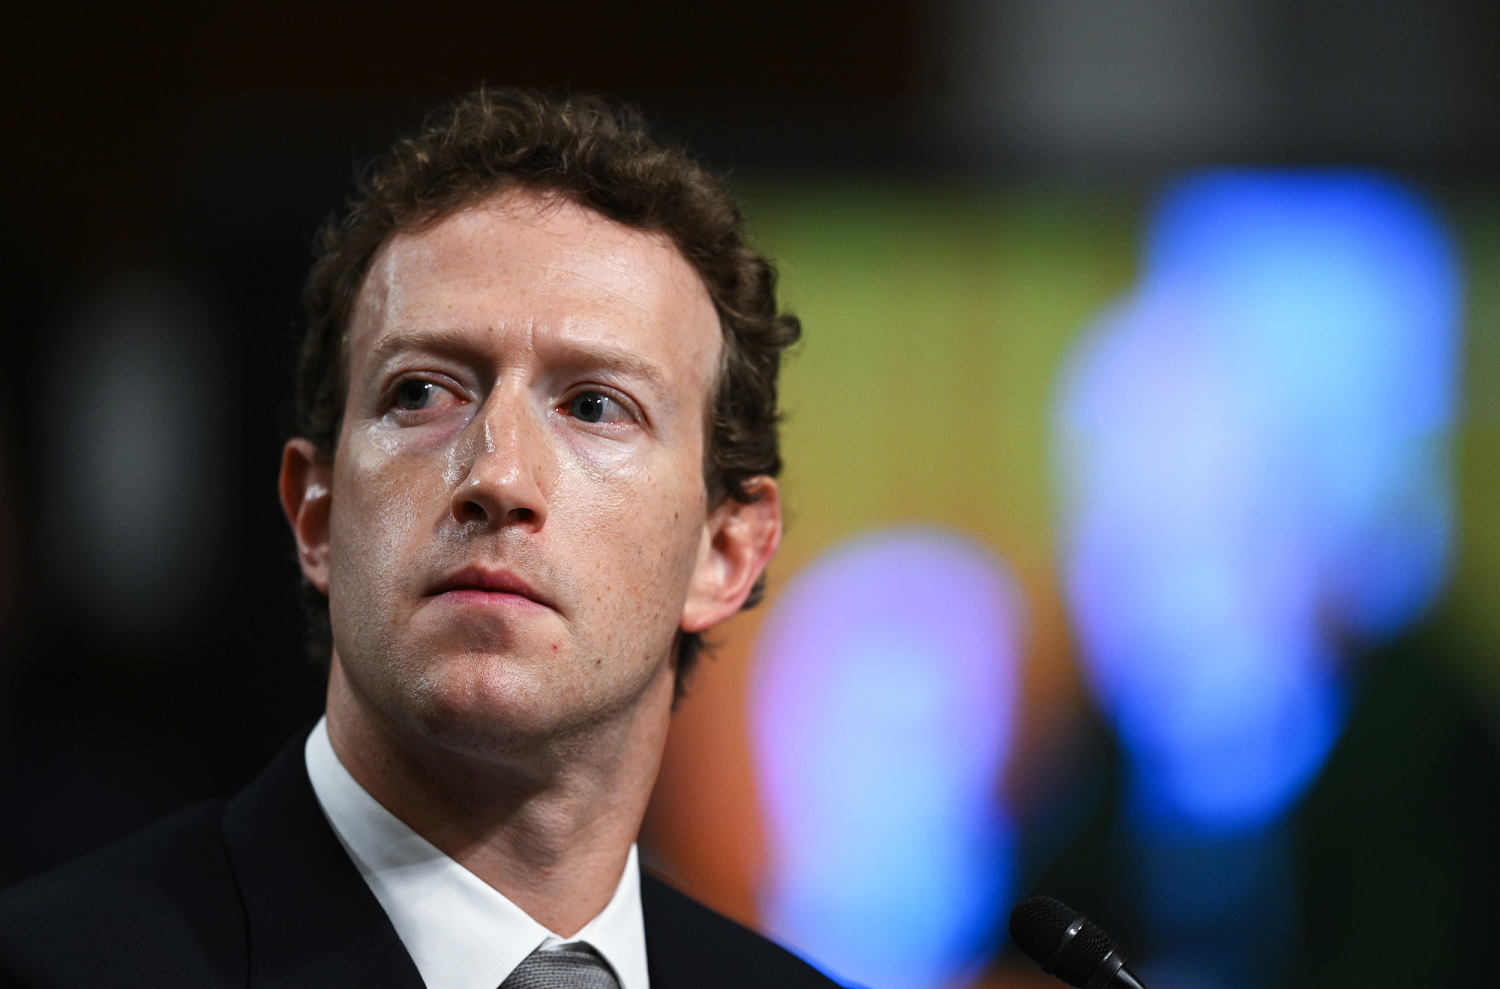 Meta stock plummets after Zuckerberg touts money-losing projects